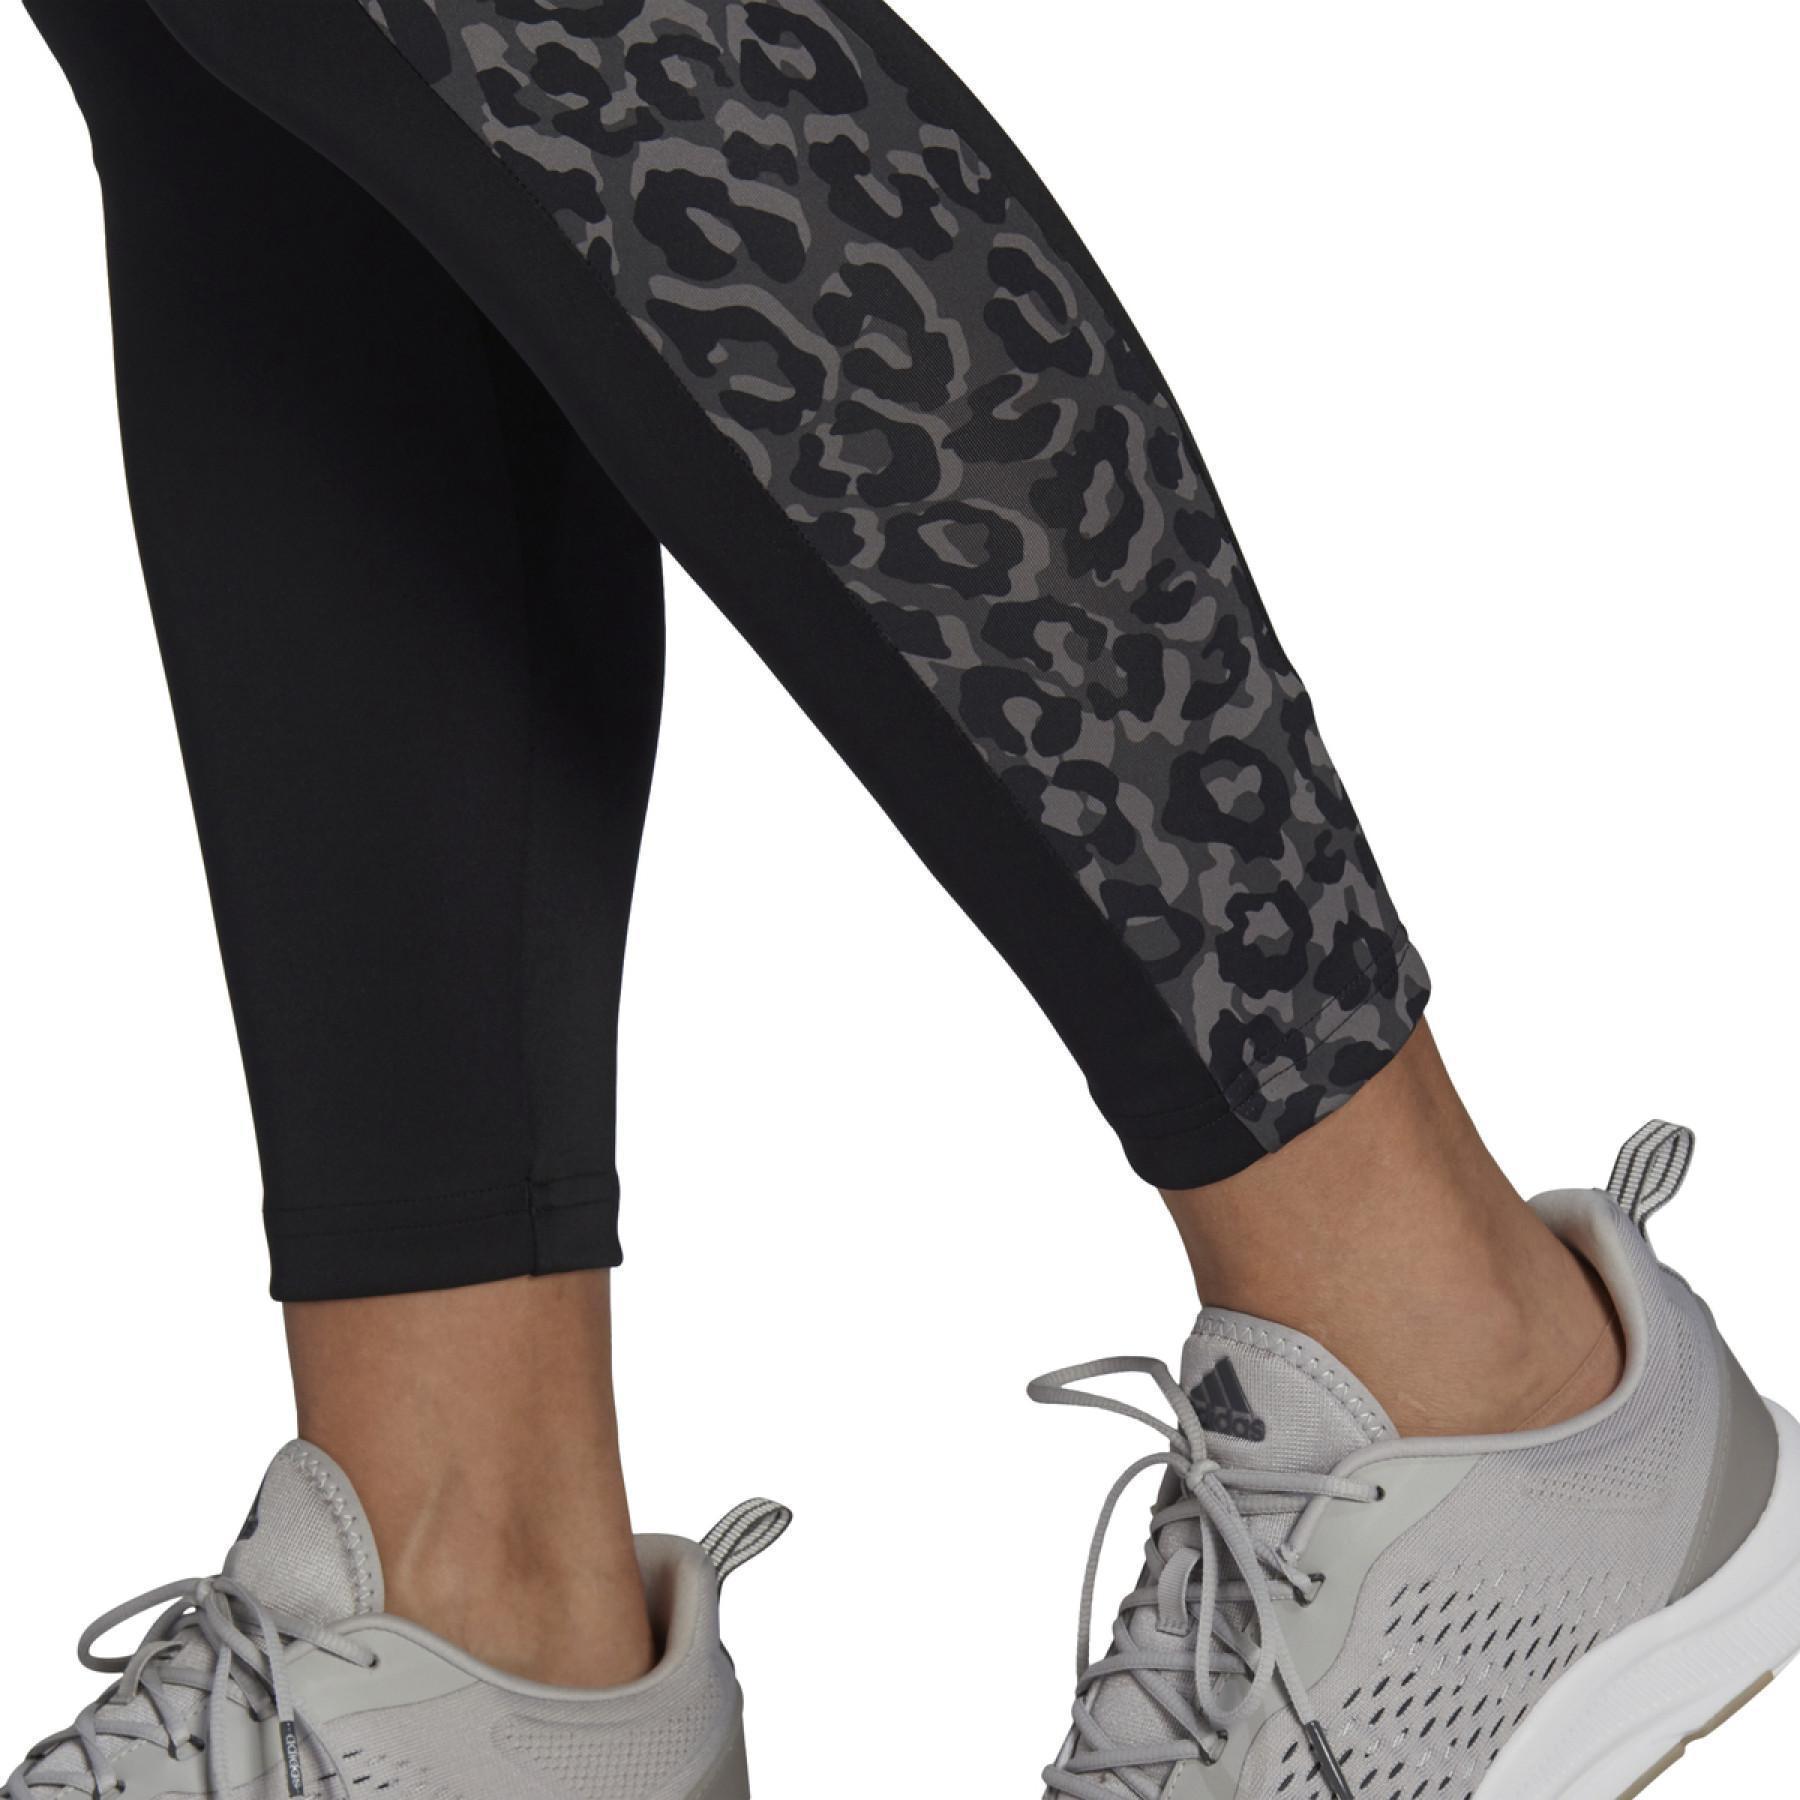 Leggings de mujer adidas Designed To Move Aeoready Leopard Imprimé 7/8